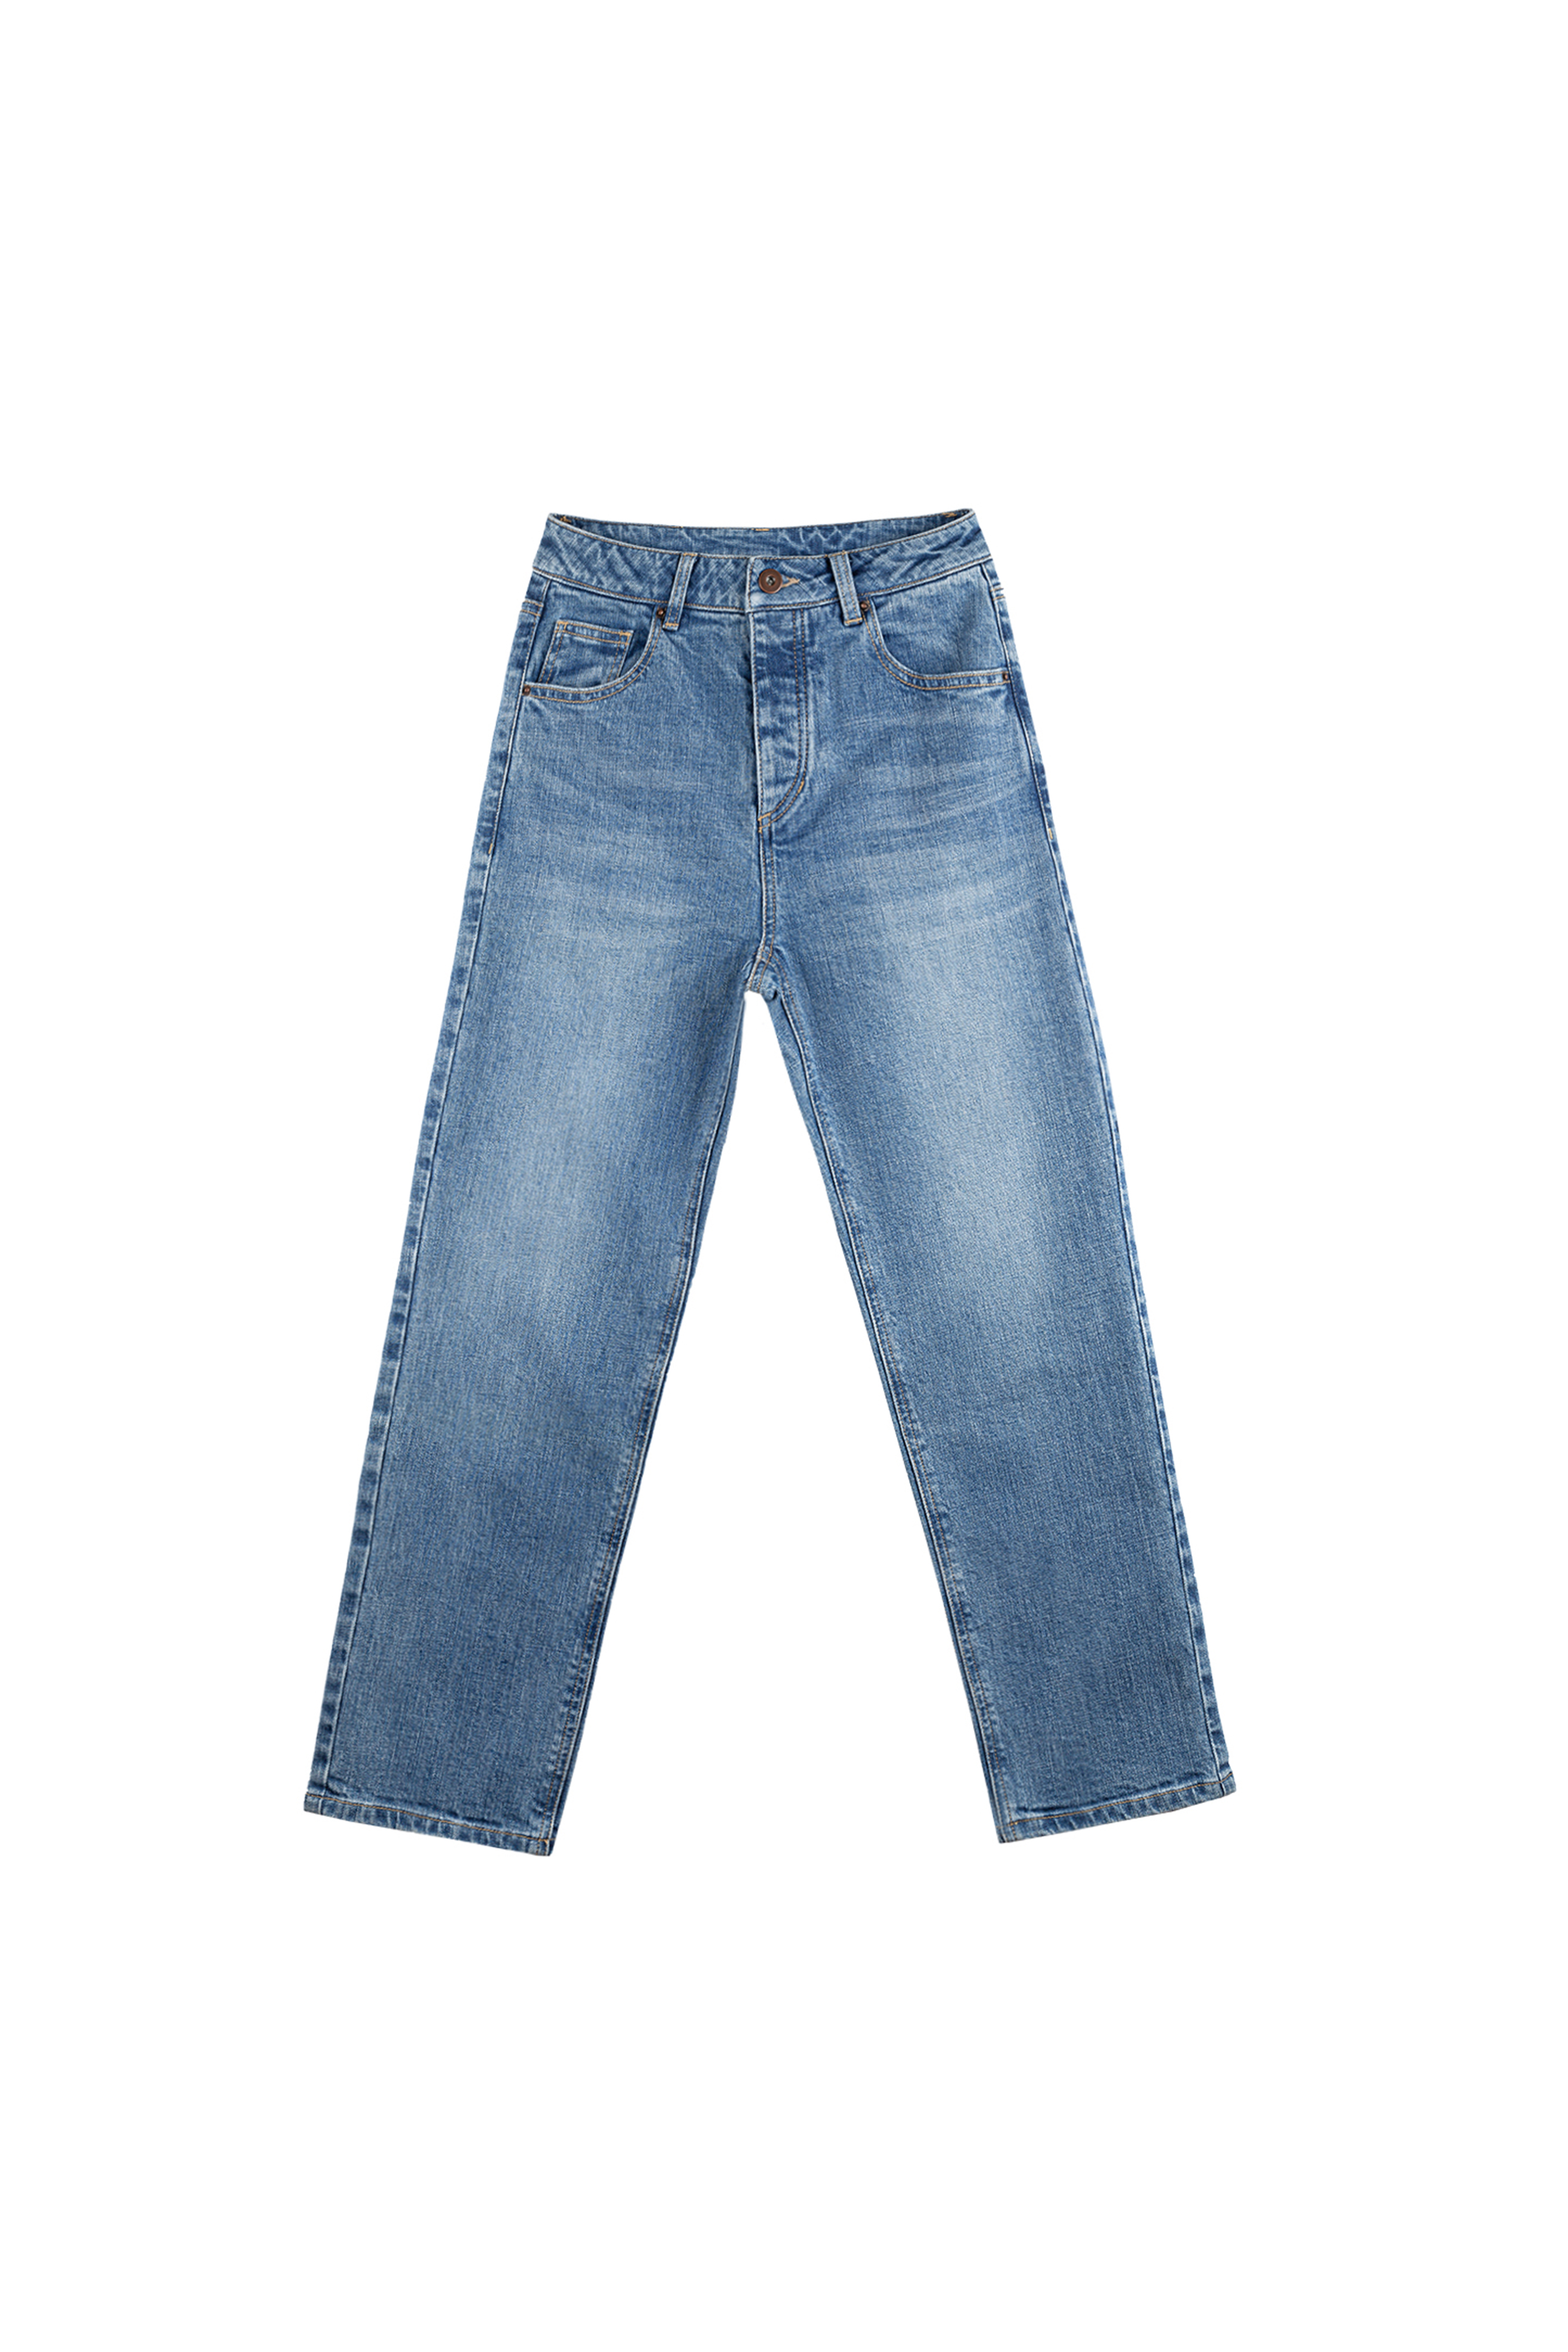 2nd) Jeans Regular Straight Fit Blue from Sakamoto, Okayama